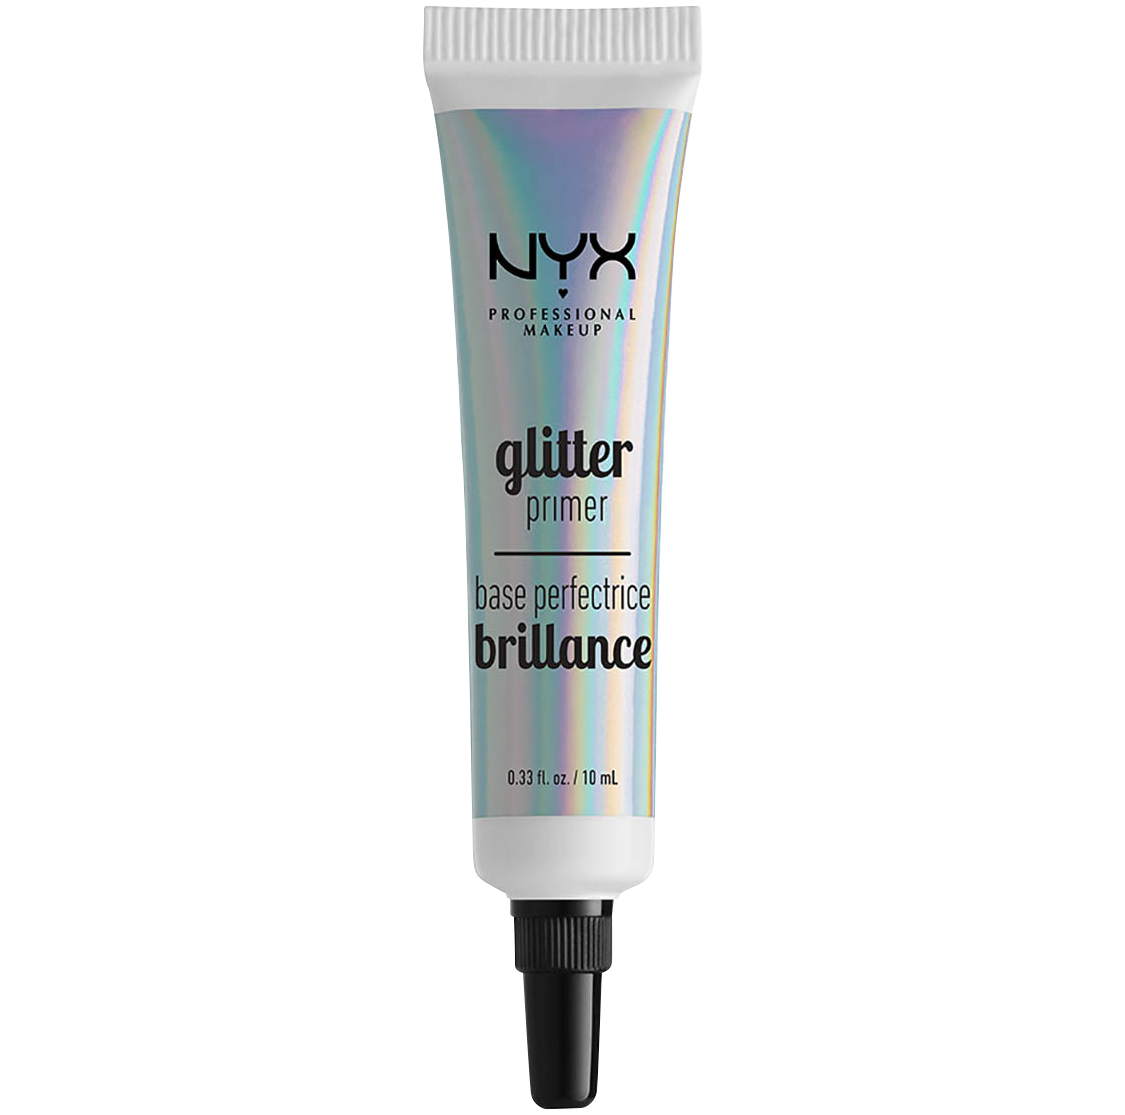 NYX праймер для глиттера. NYX professional Makeup. NYX professional основа под макияж. База под глиттер НИКС. Праймер для теней